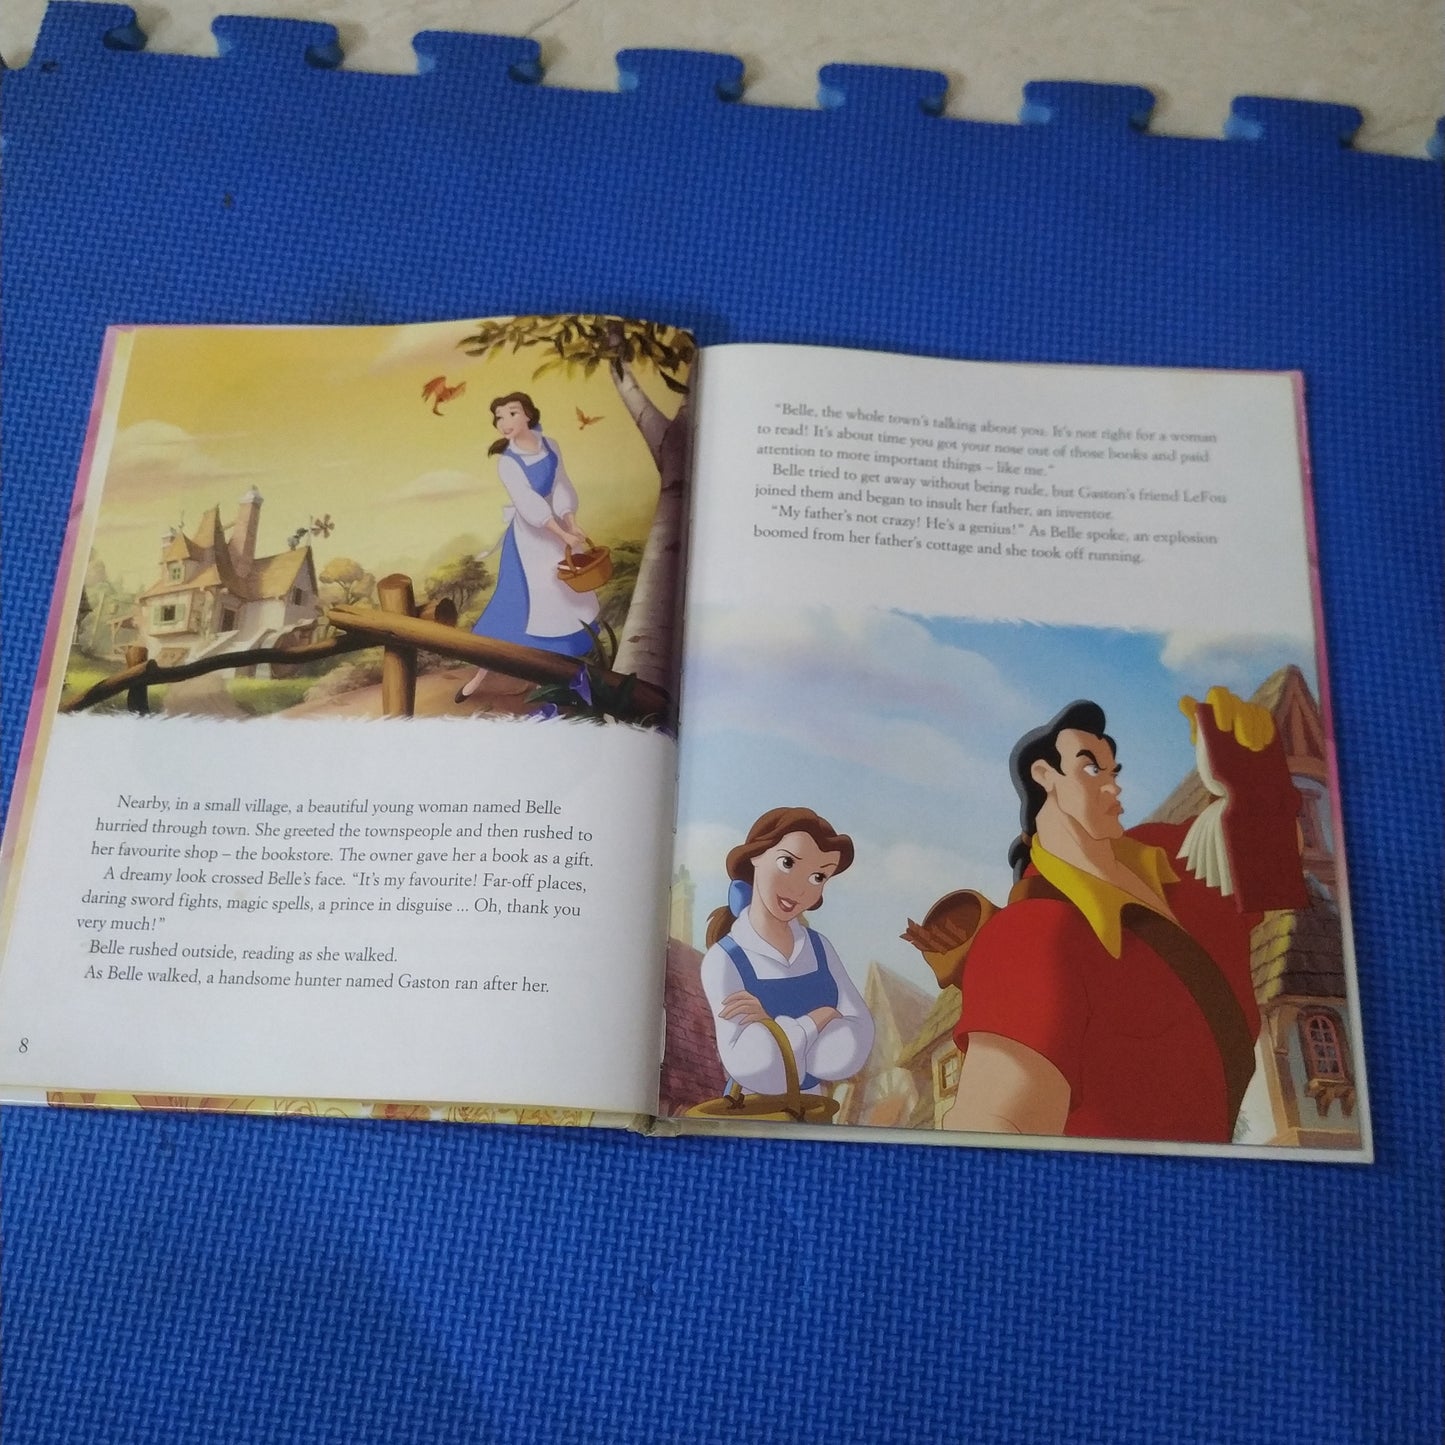 Disney Princess Beauty and Beast Read-along story